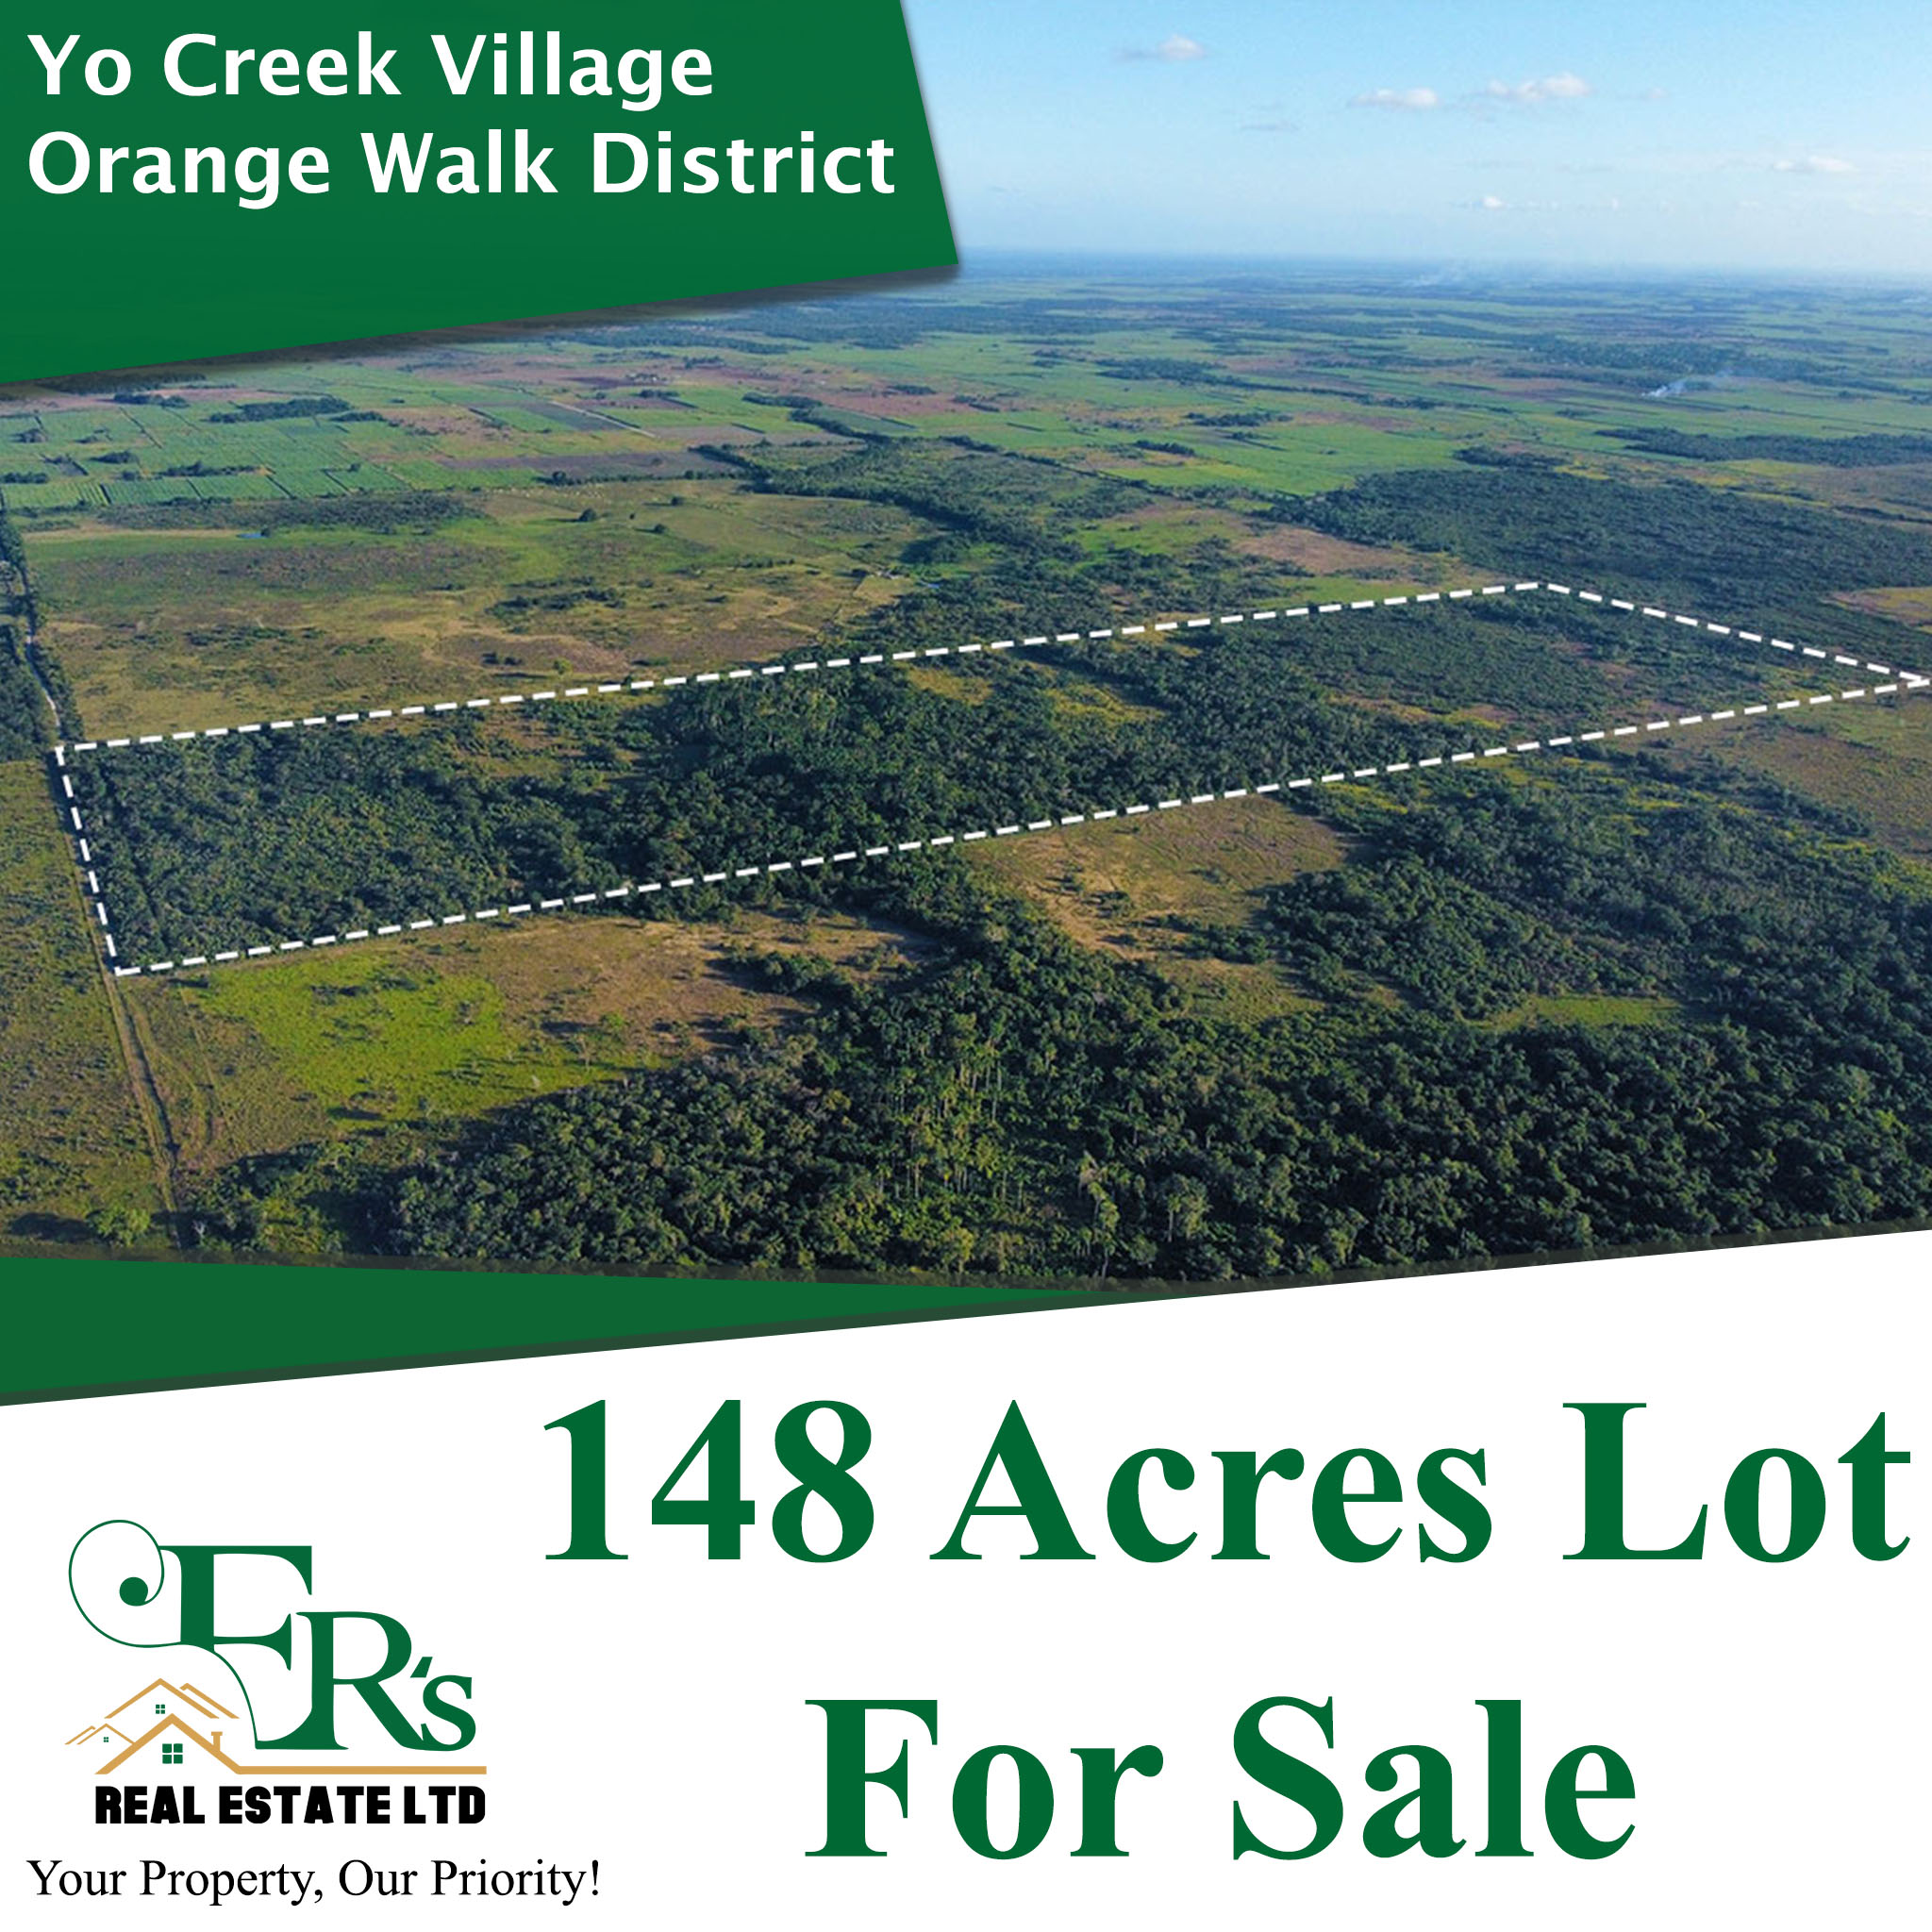 148 Acres Lot in Yo Creek Village, Orange Walk